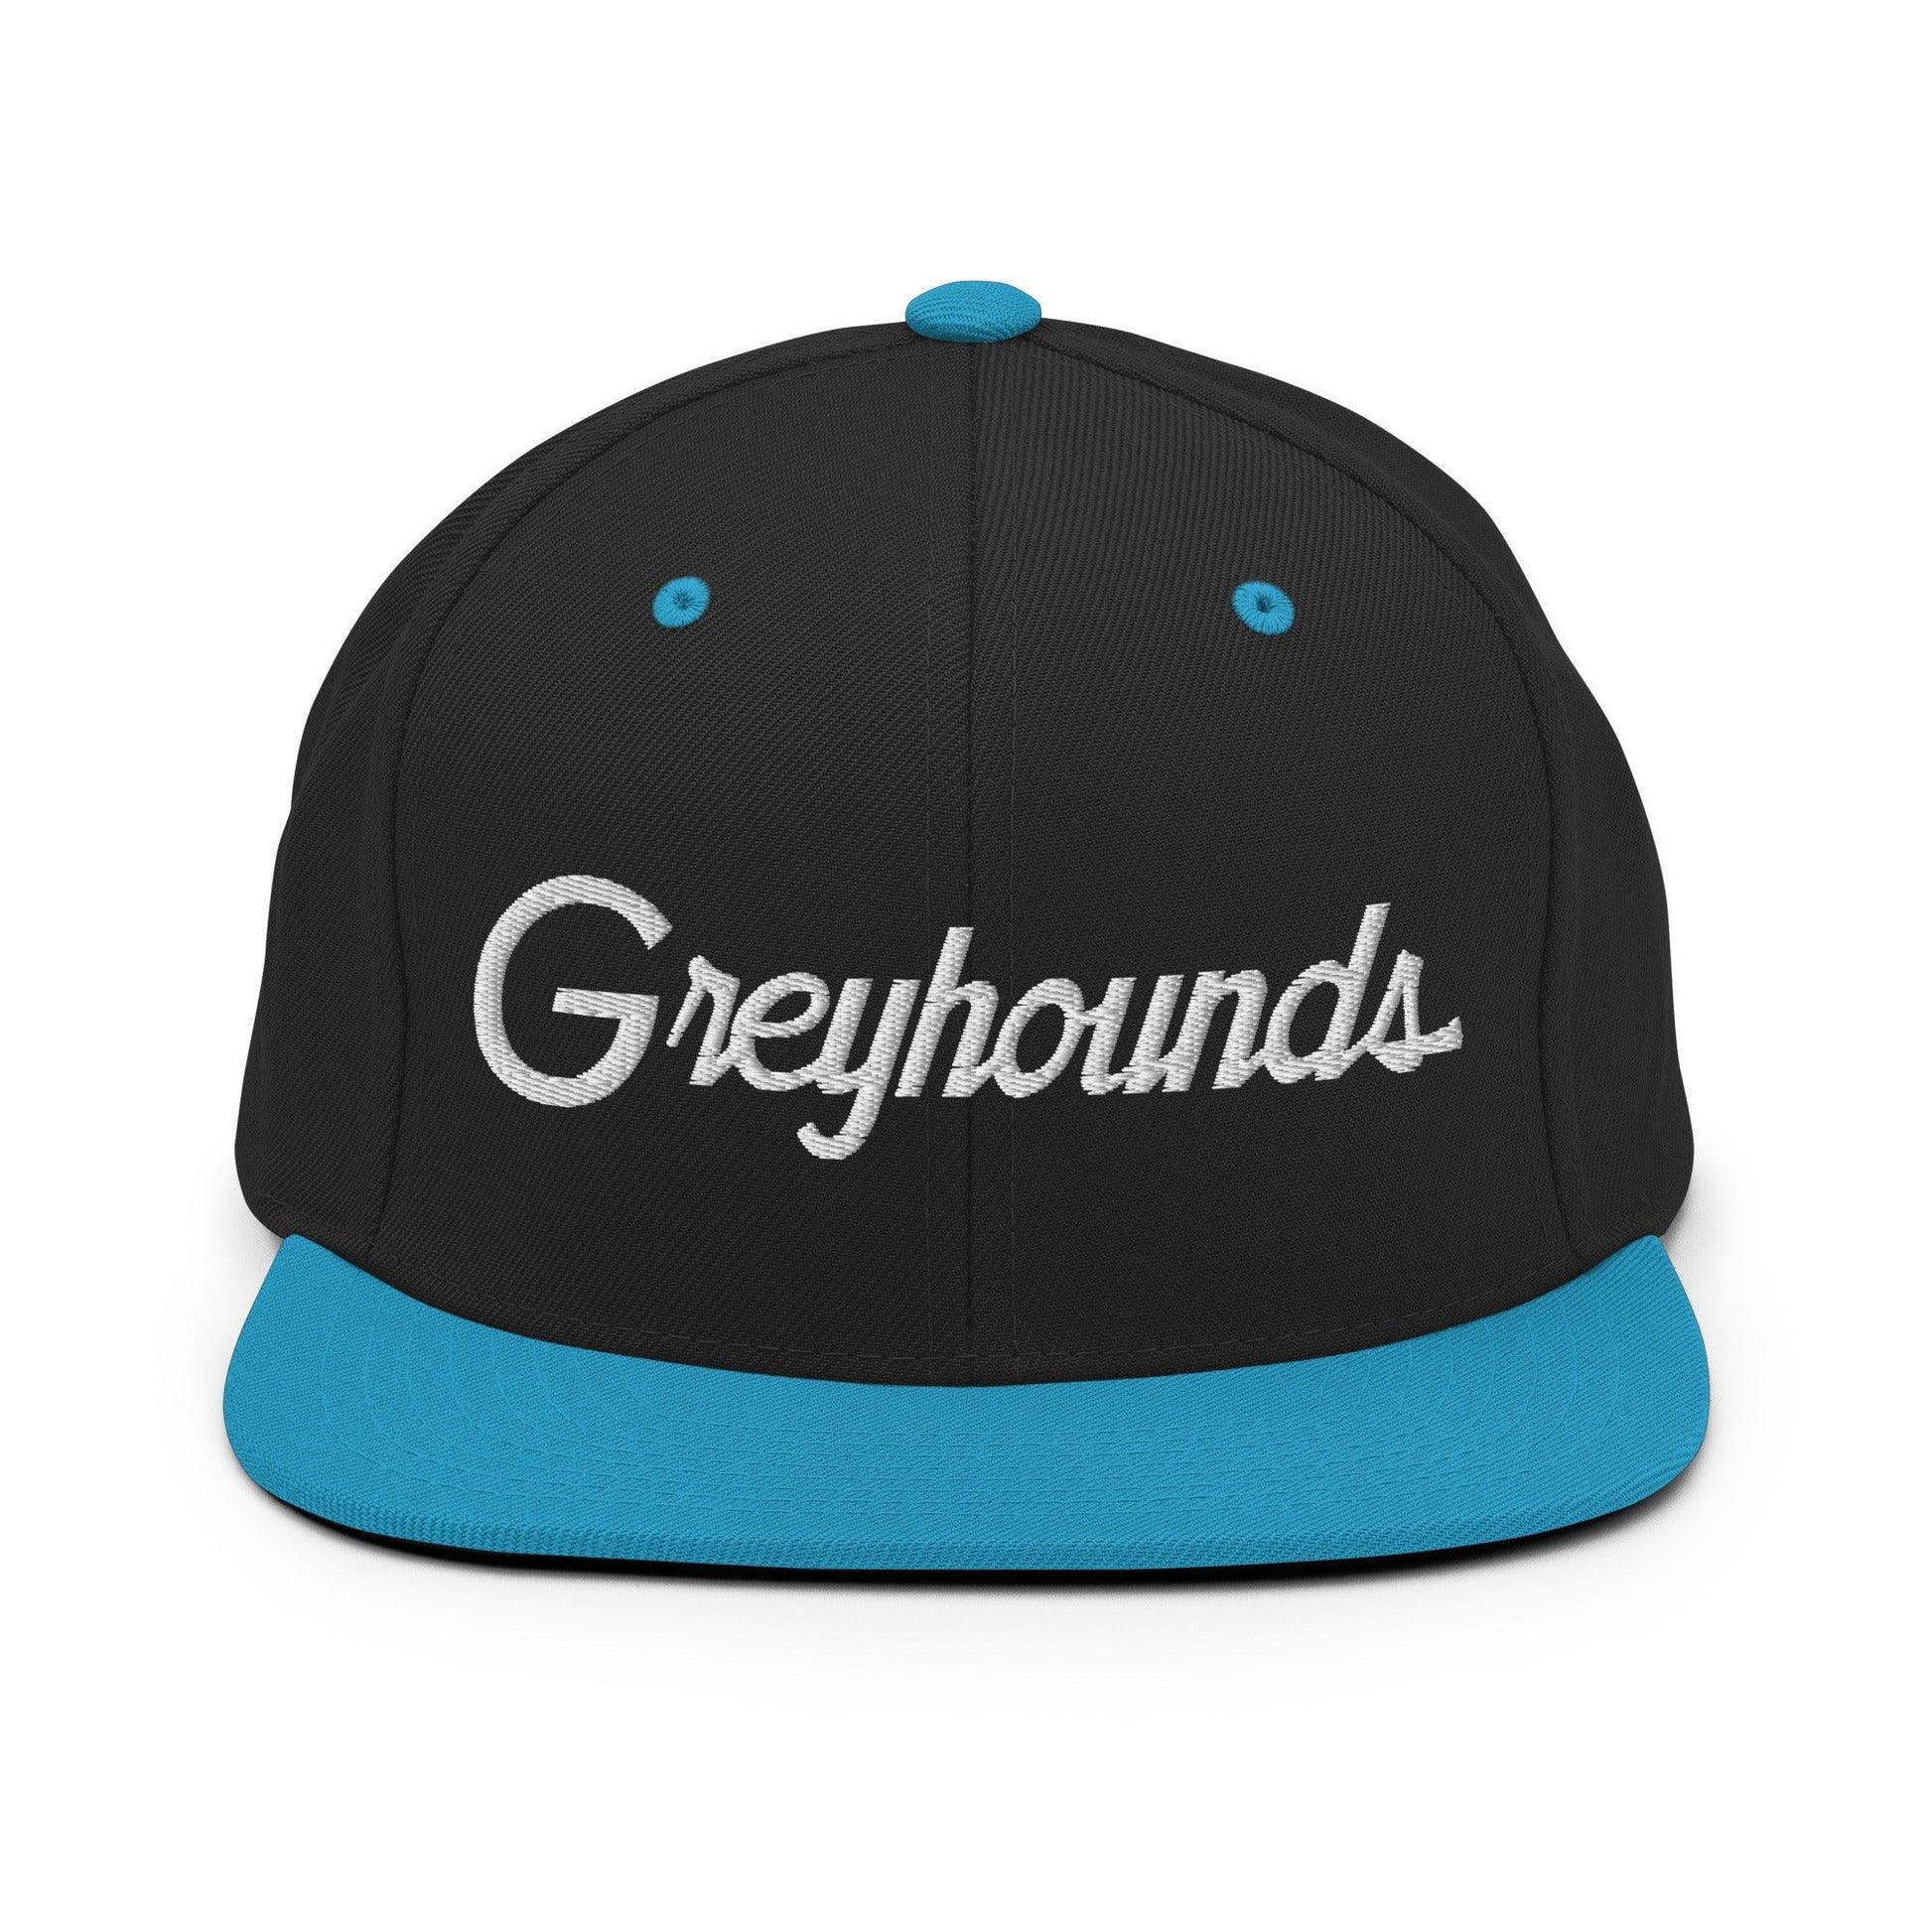 Greyhounds School Mascot Script Snapback Hat Black Teal